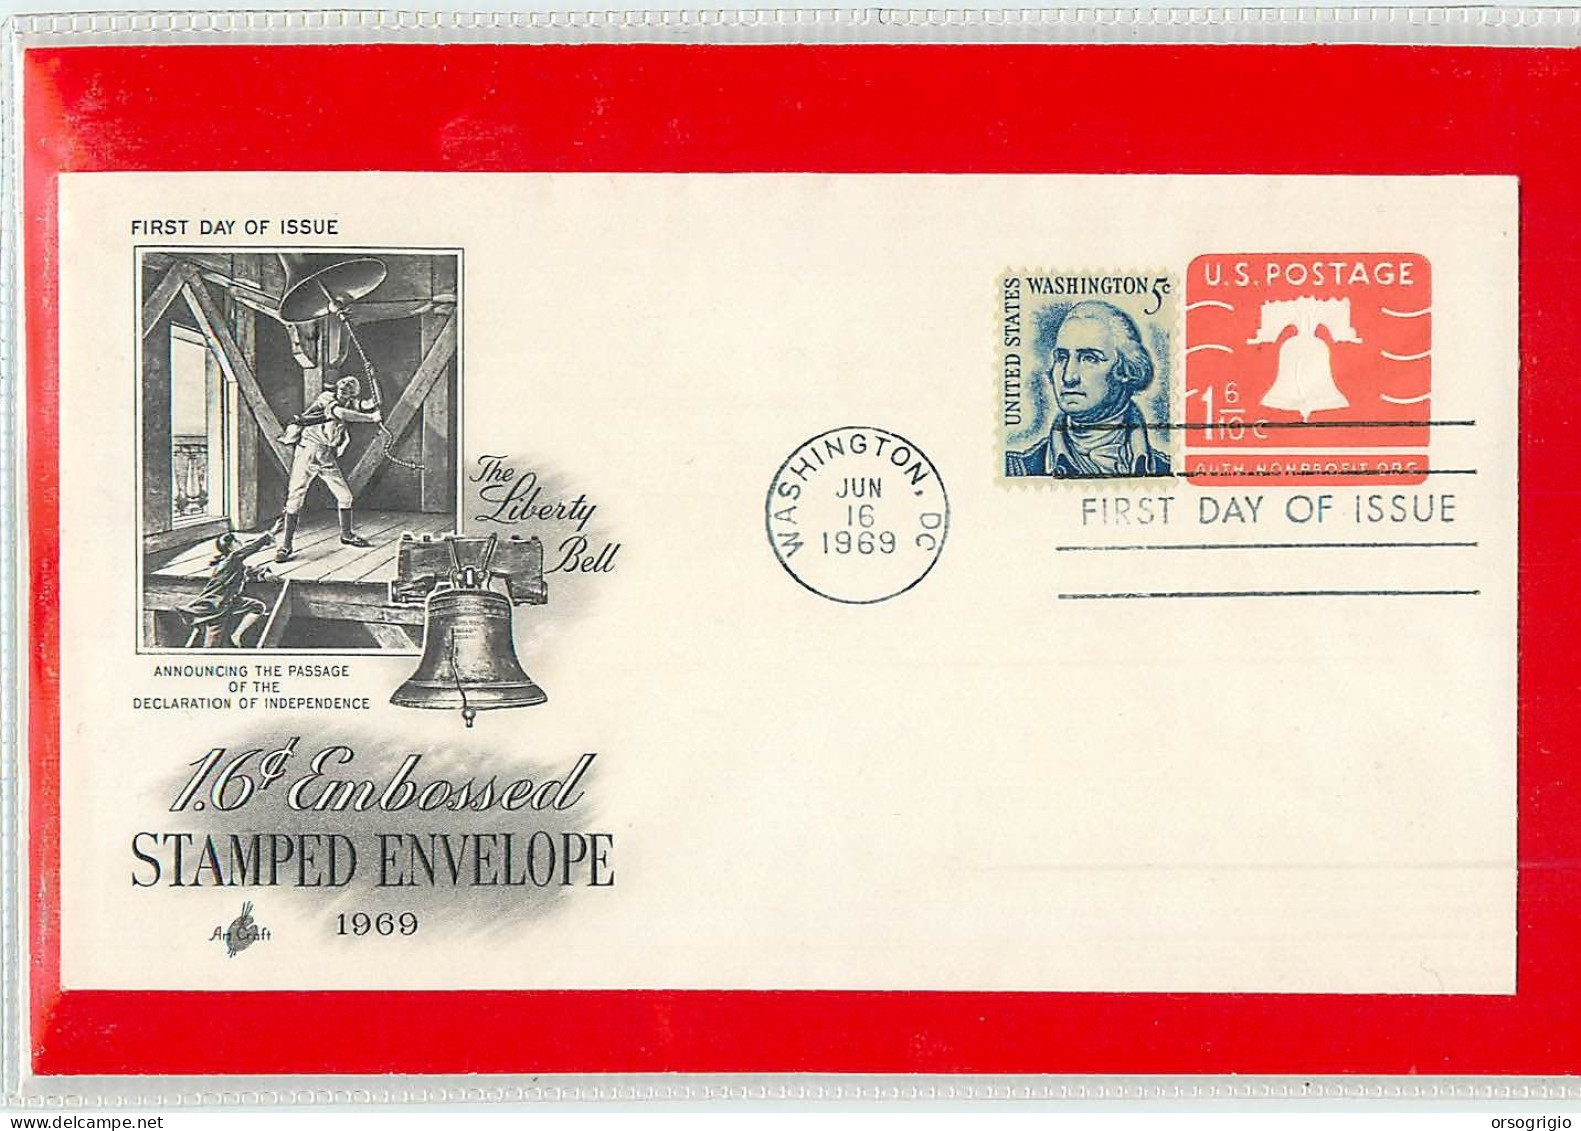 USA - EMBOSSED STAMPED ENVELOPE - FDC 1969 - 1961-80